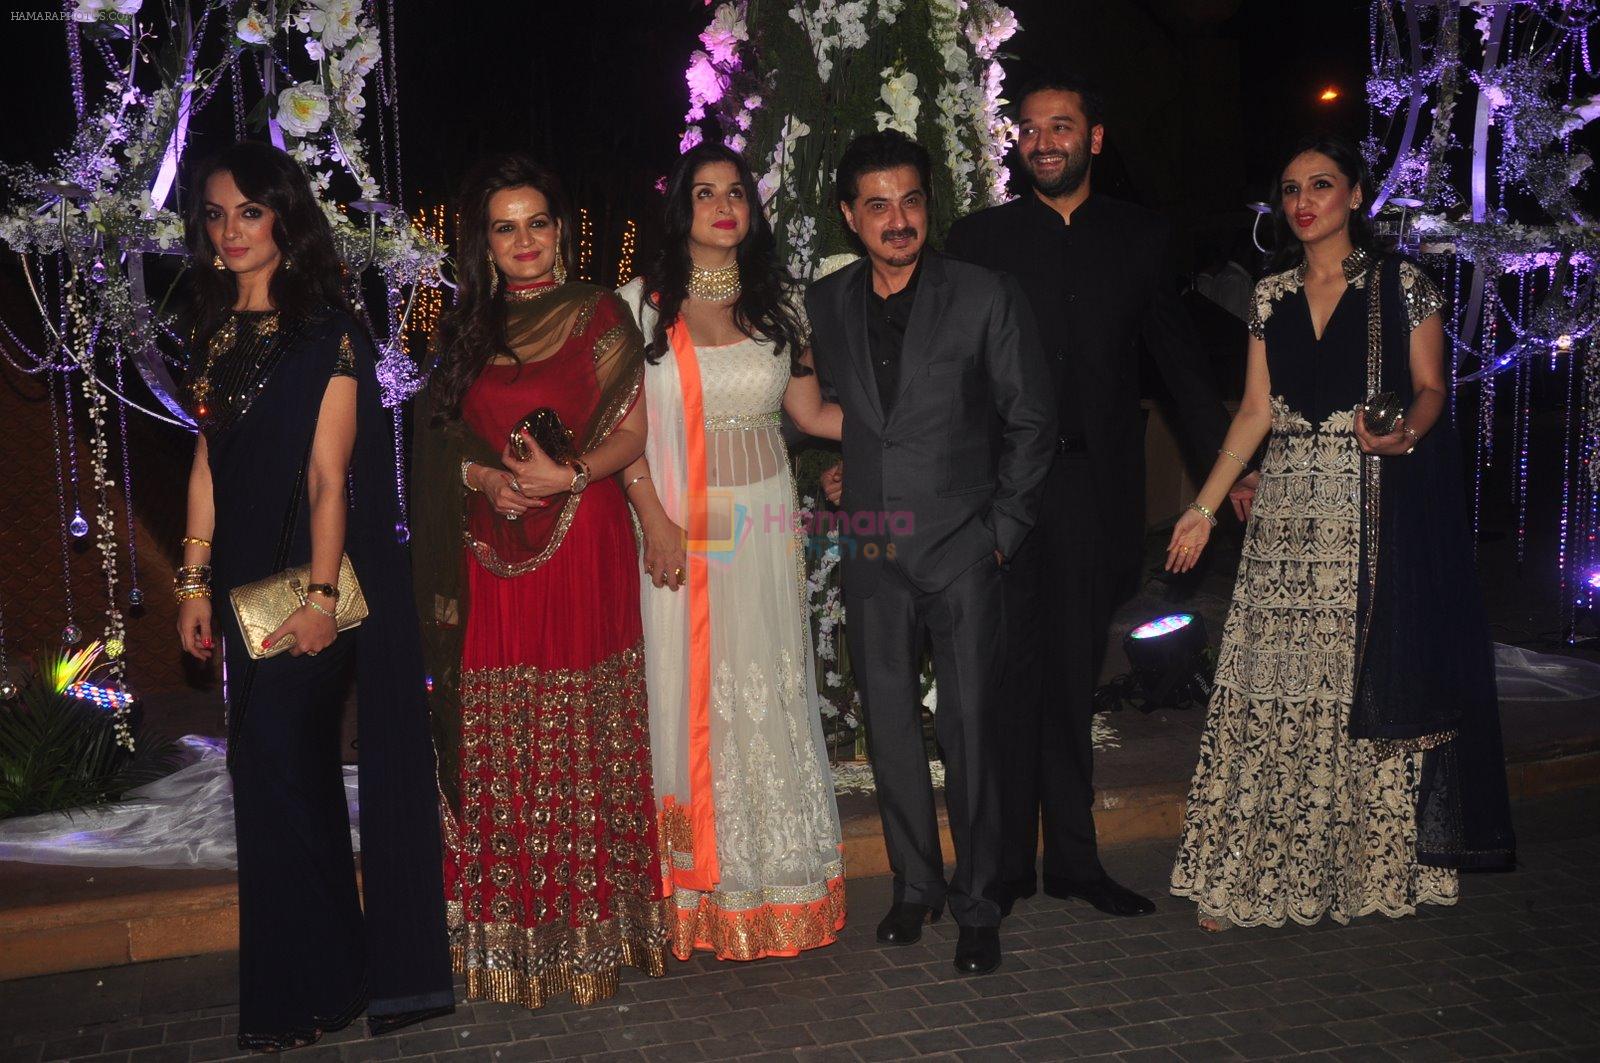 Sanjay Kapoor, Maheep Kapoor, Anu Dewan at Sangeet ceremony of Riddhi Malhotra and Tejas Talwalkar in J W Marriott, Mumbai on 13th Dec 2014